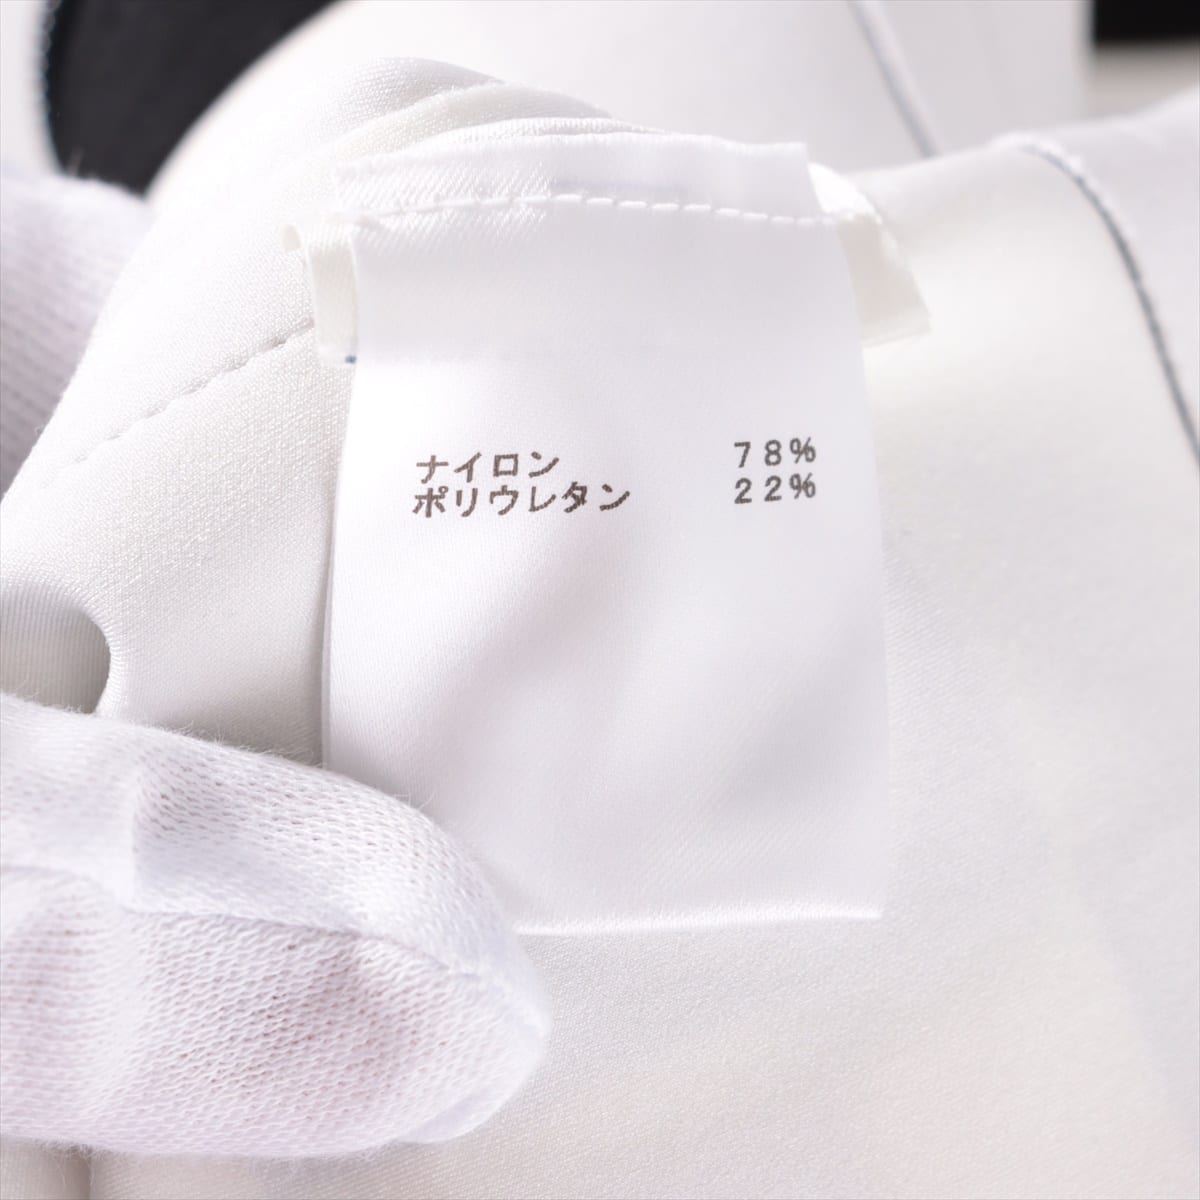 Louis Vuitton Nylon x polyurethane robes 34 Ladies' Black × White  Monogram High neck DAMIER DRESS Technical jersey